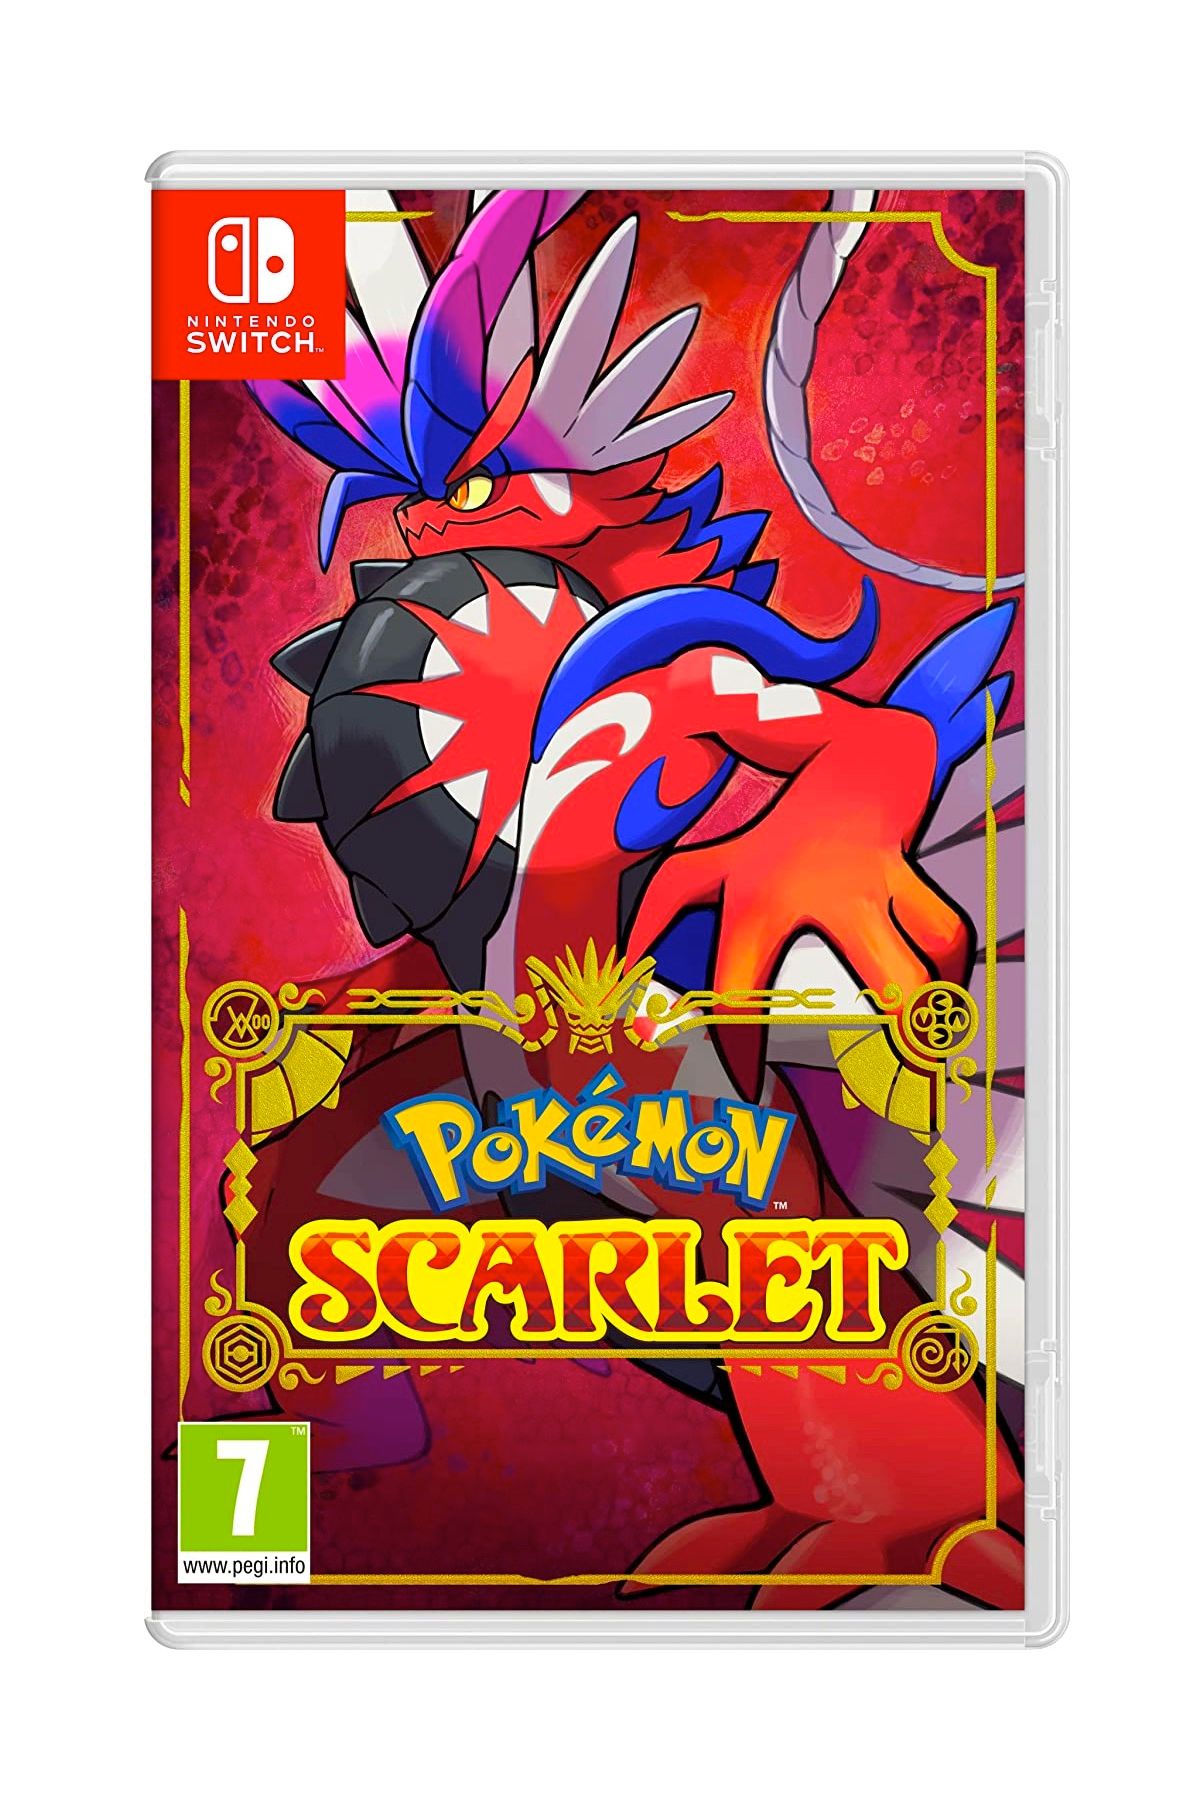 Nintendo Switch- Pokemon Scarlet Video Game